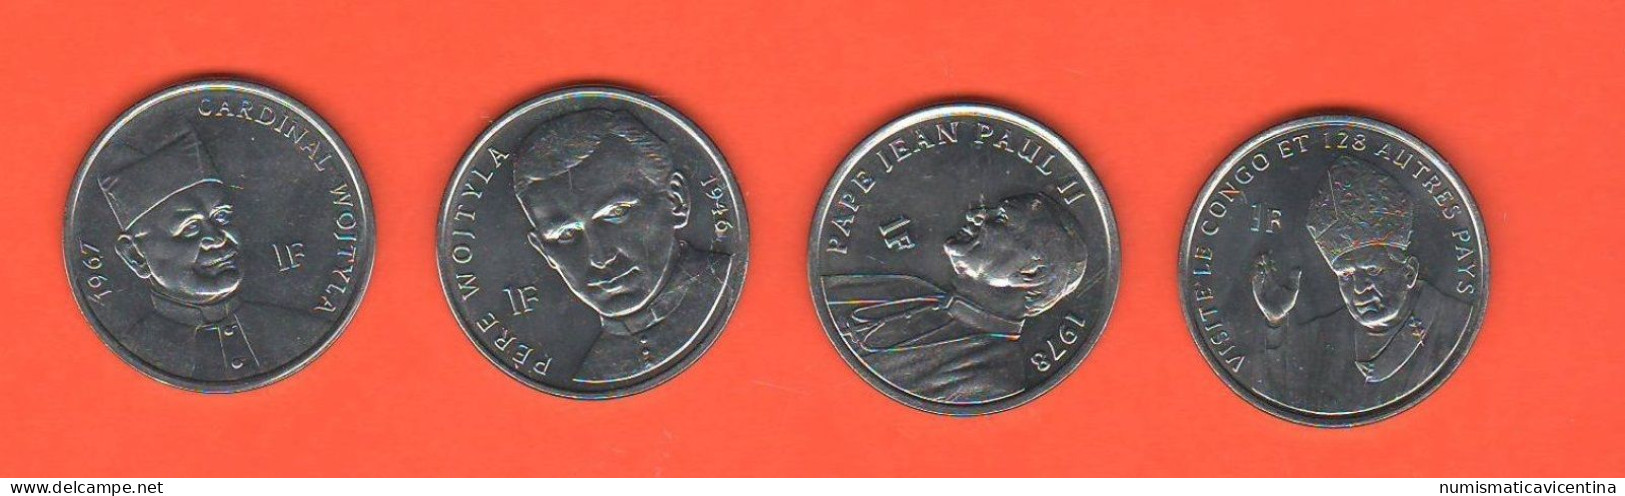 Congo 4 X 1 Franc 2004 Democratic République Démocratique Du Congo - Congo (Democratic Republic 1998)